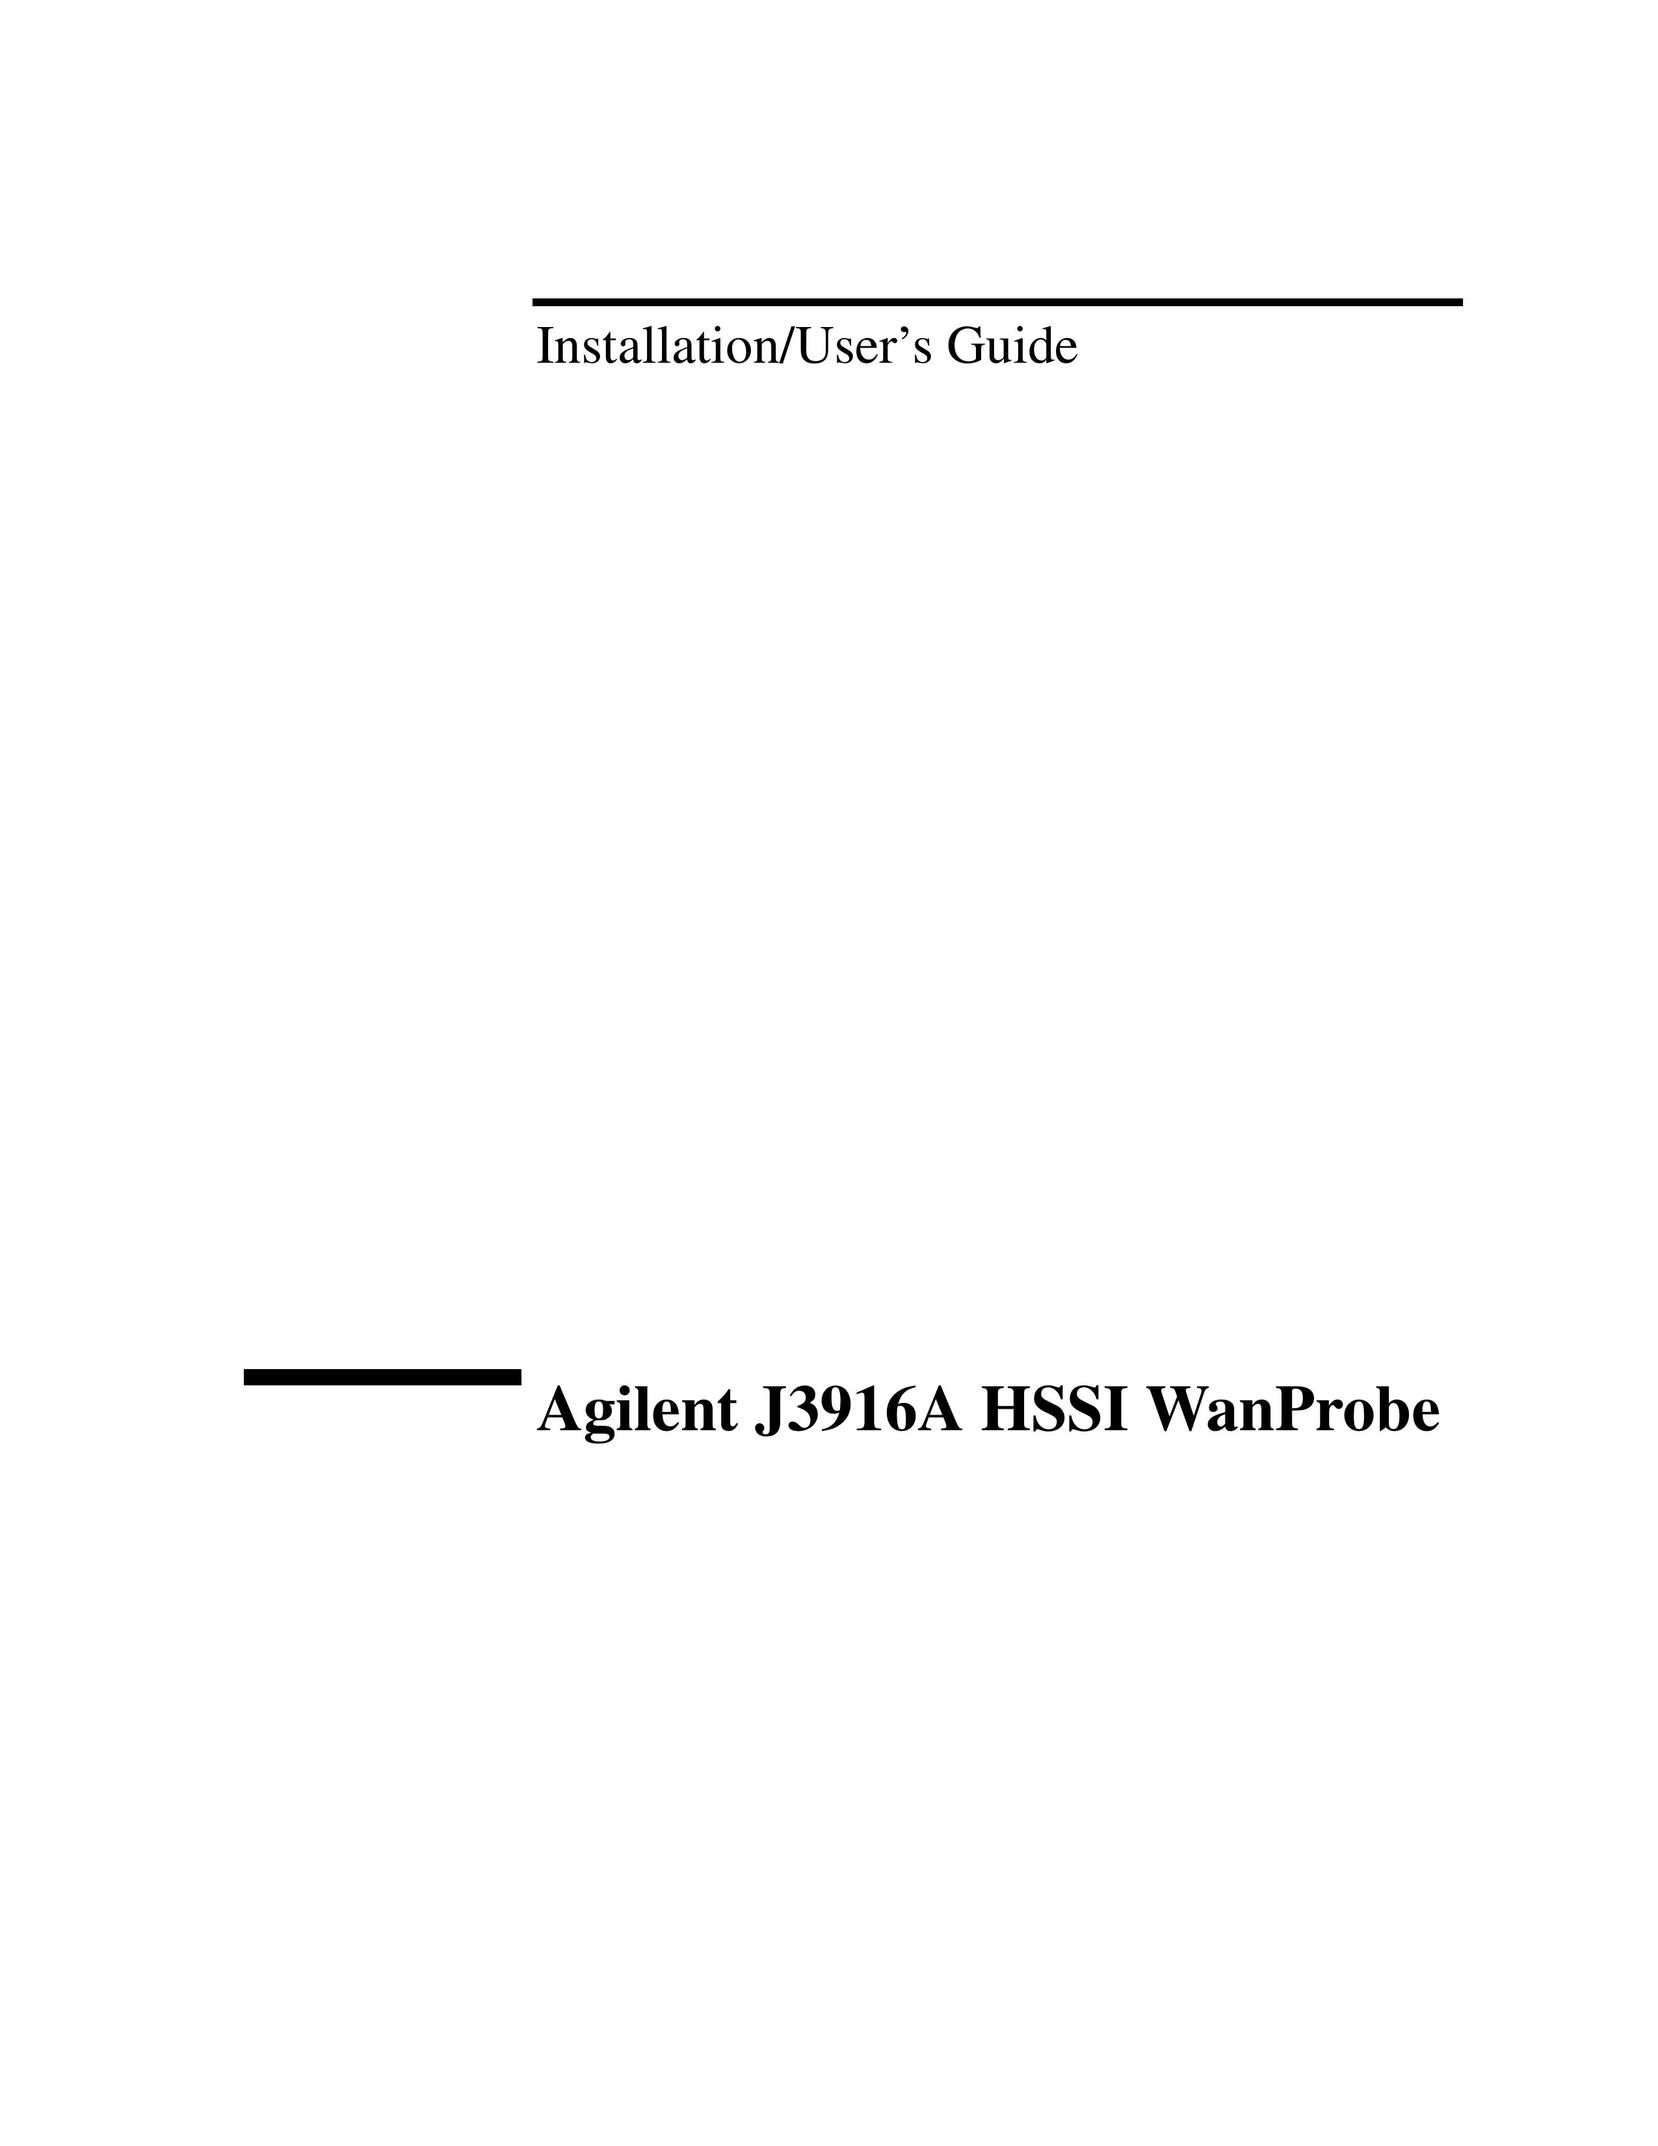 Agilent Technologies J3916A Computer Hardware User Manual